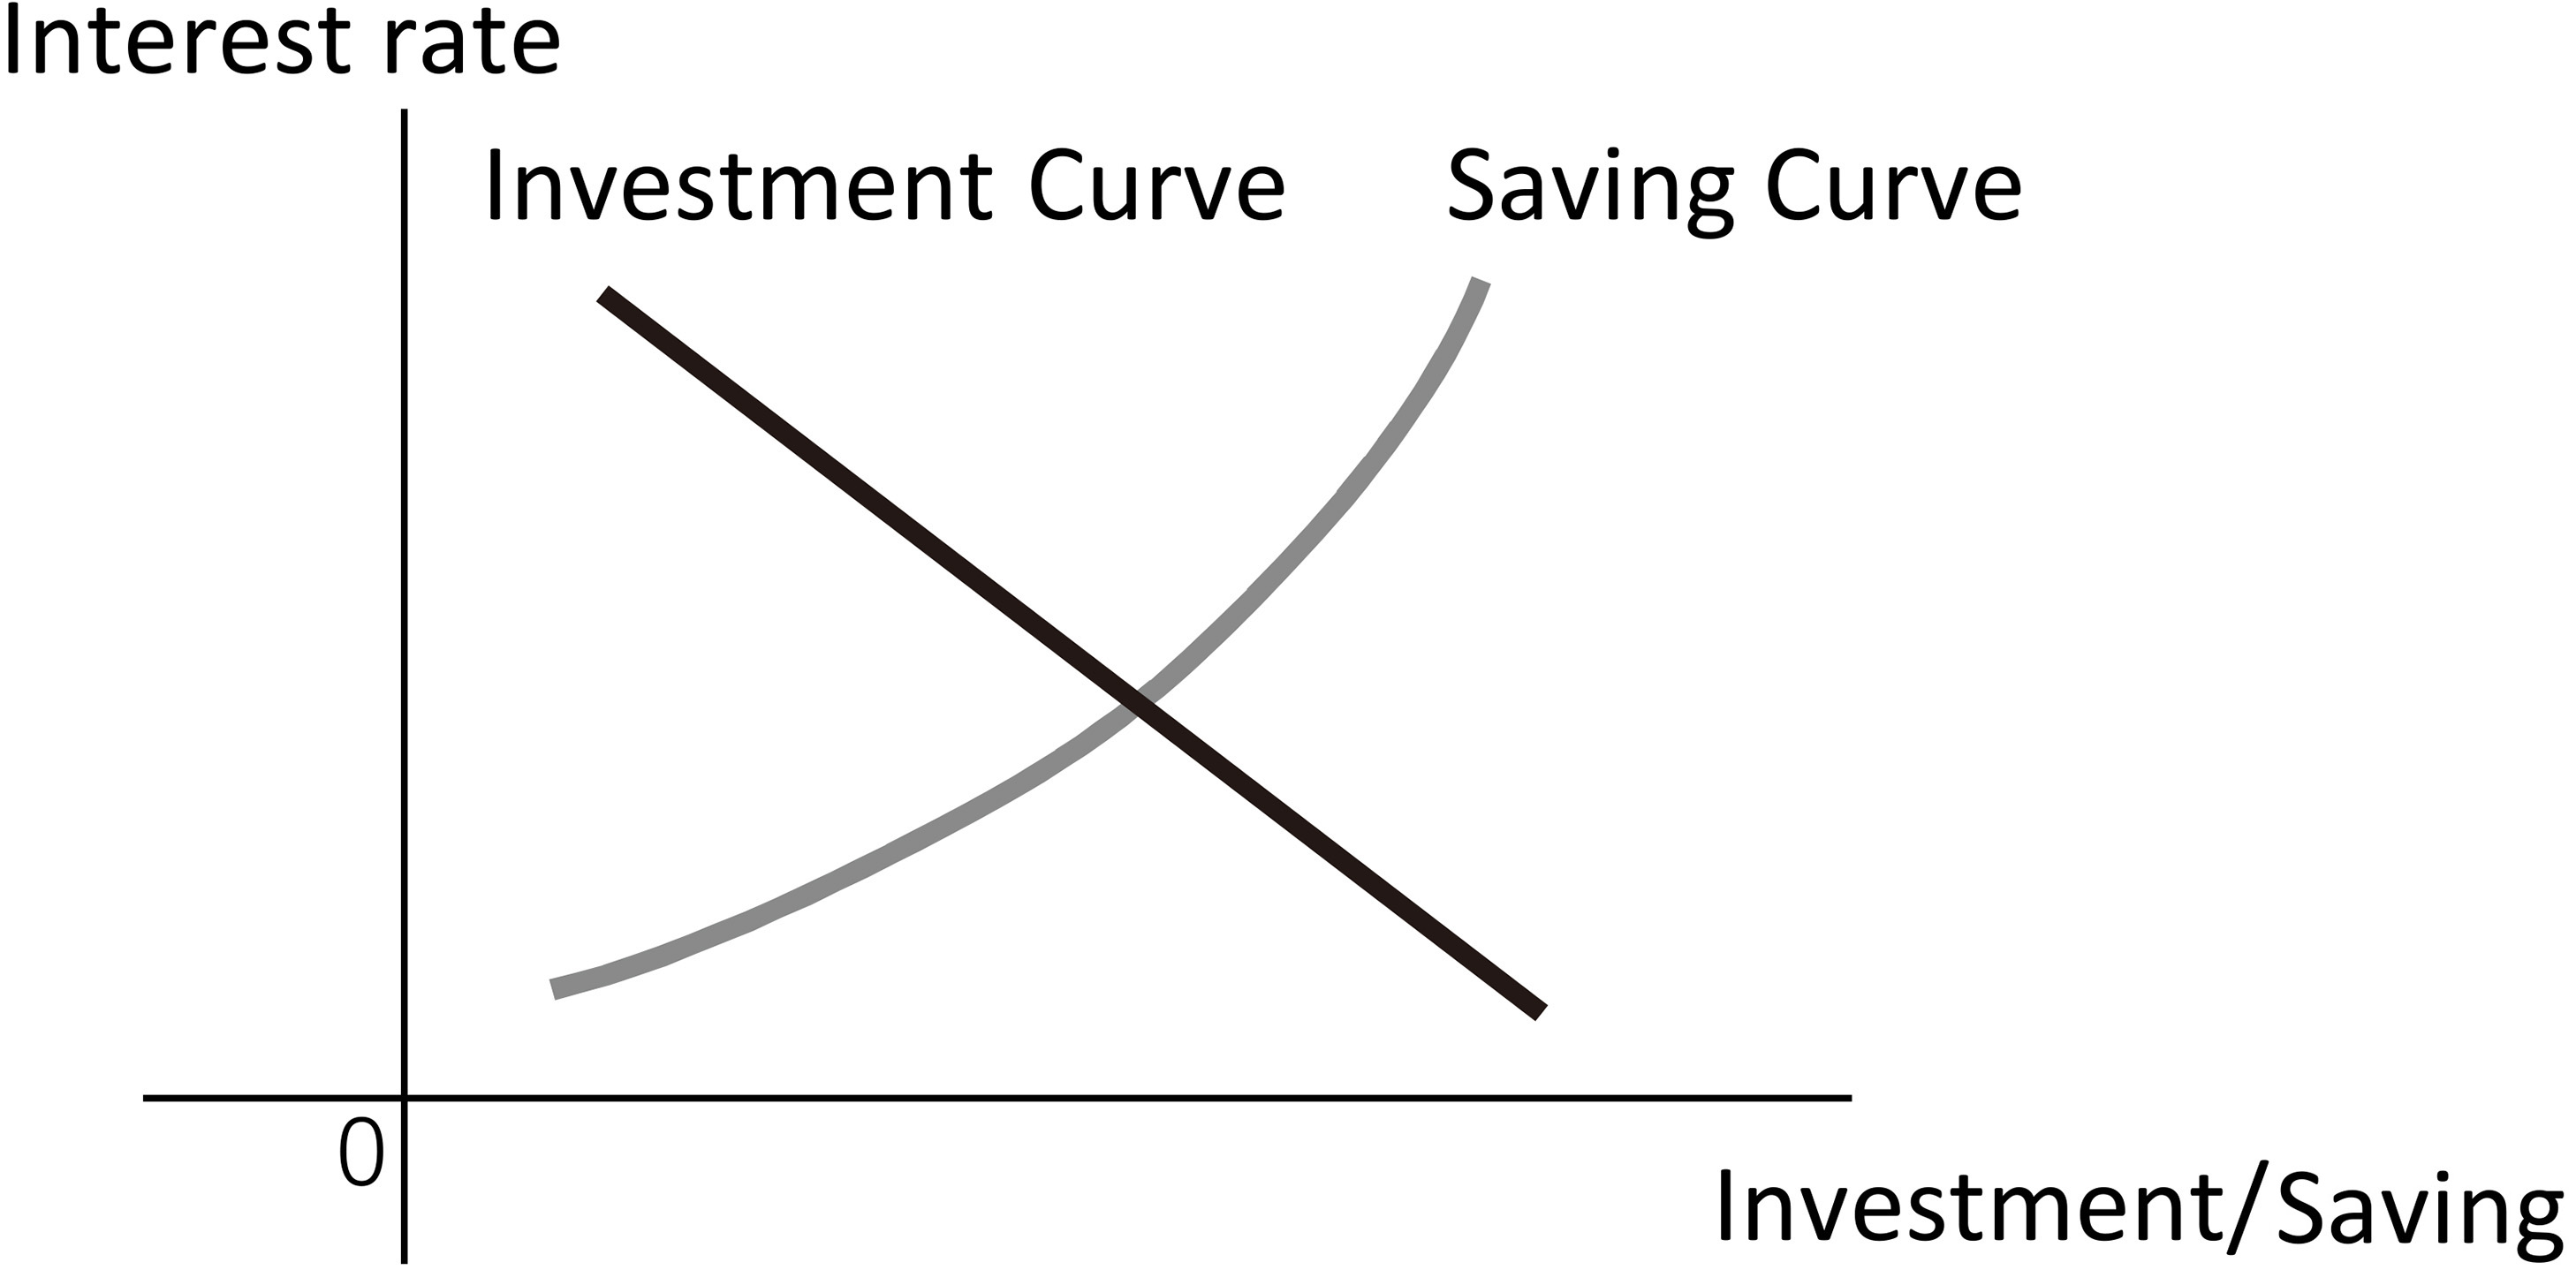 Upward-sloping saving and downward-sloping investment curves.